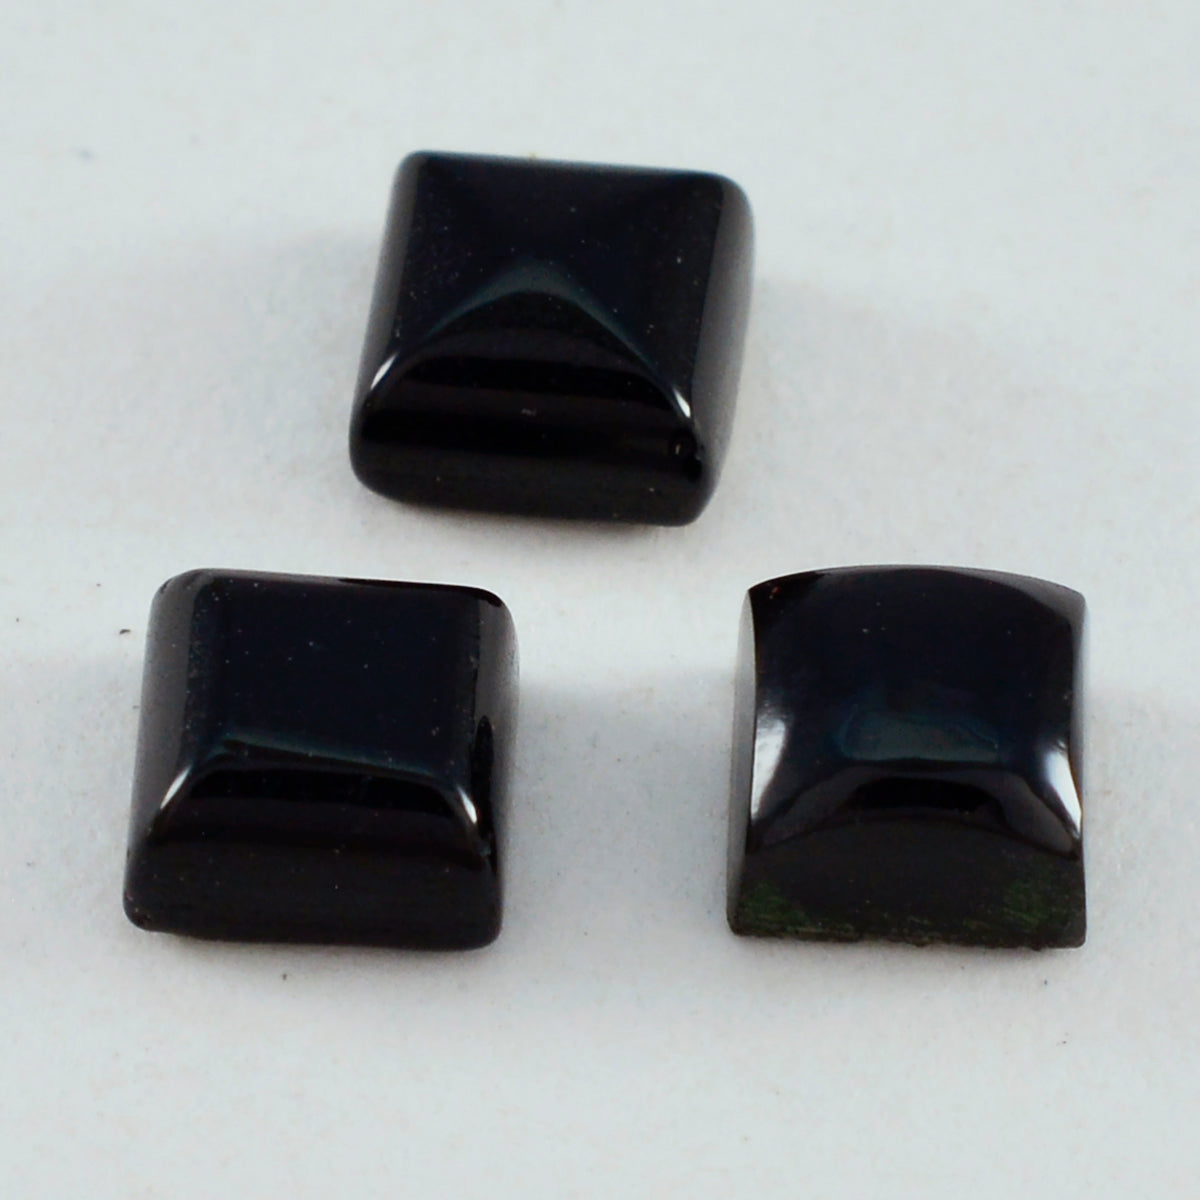 Riyogems 1PC Black Onyx Cabochon 10x10 mm Square Shape startling Quality Loose Gemstone